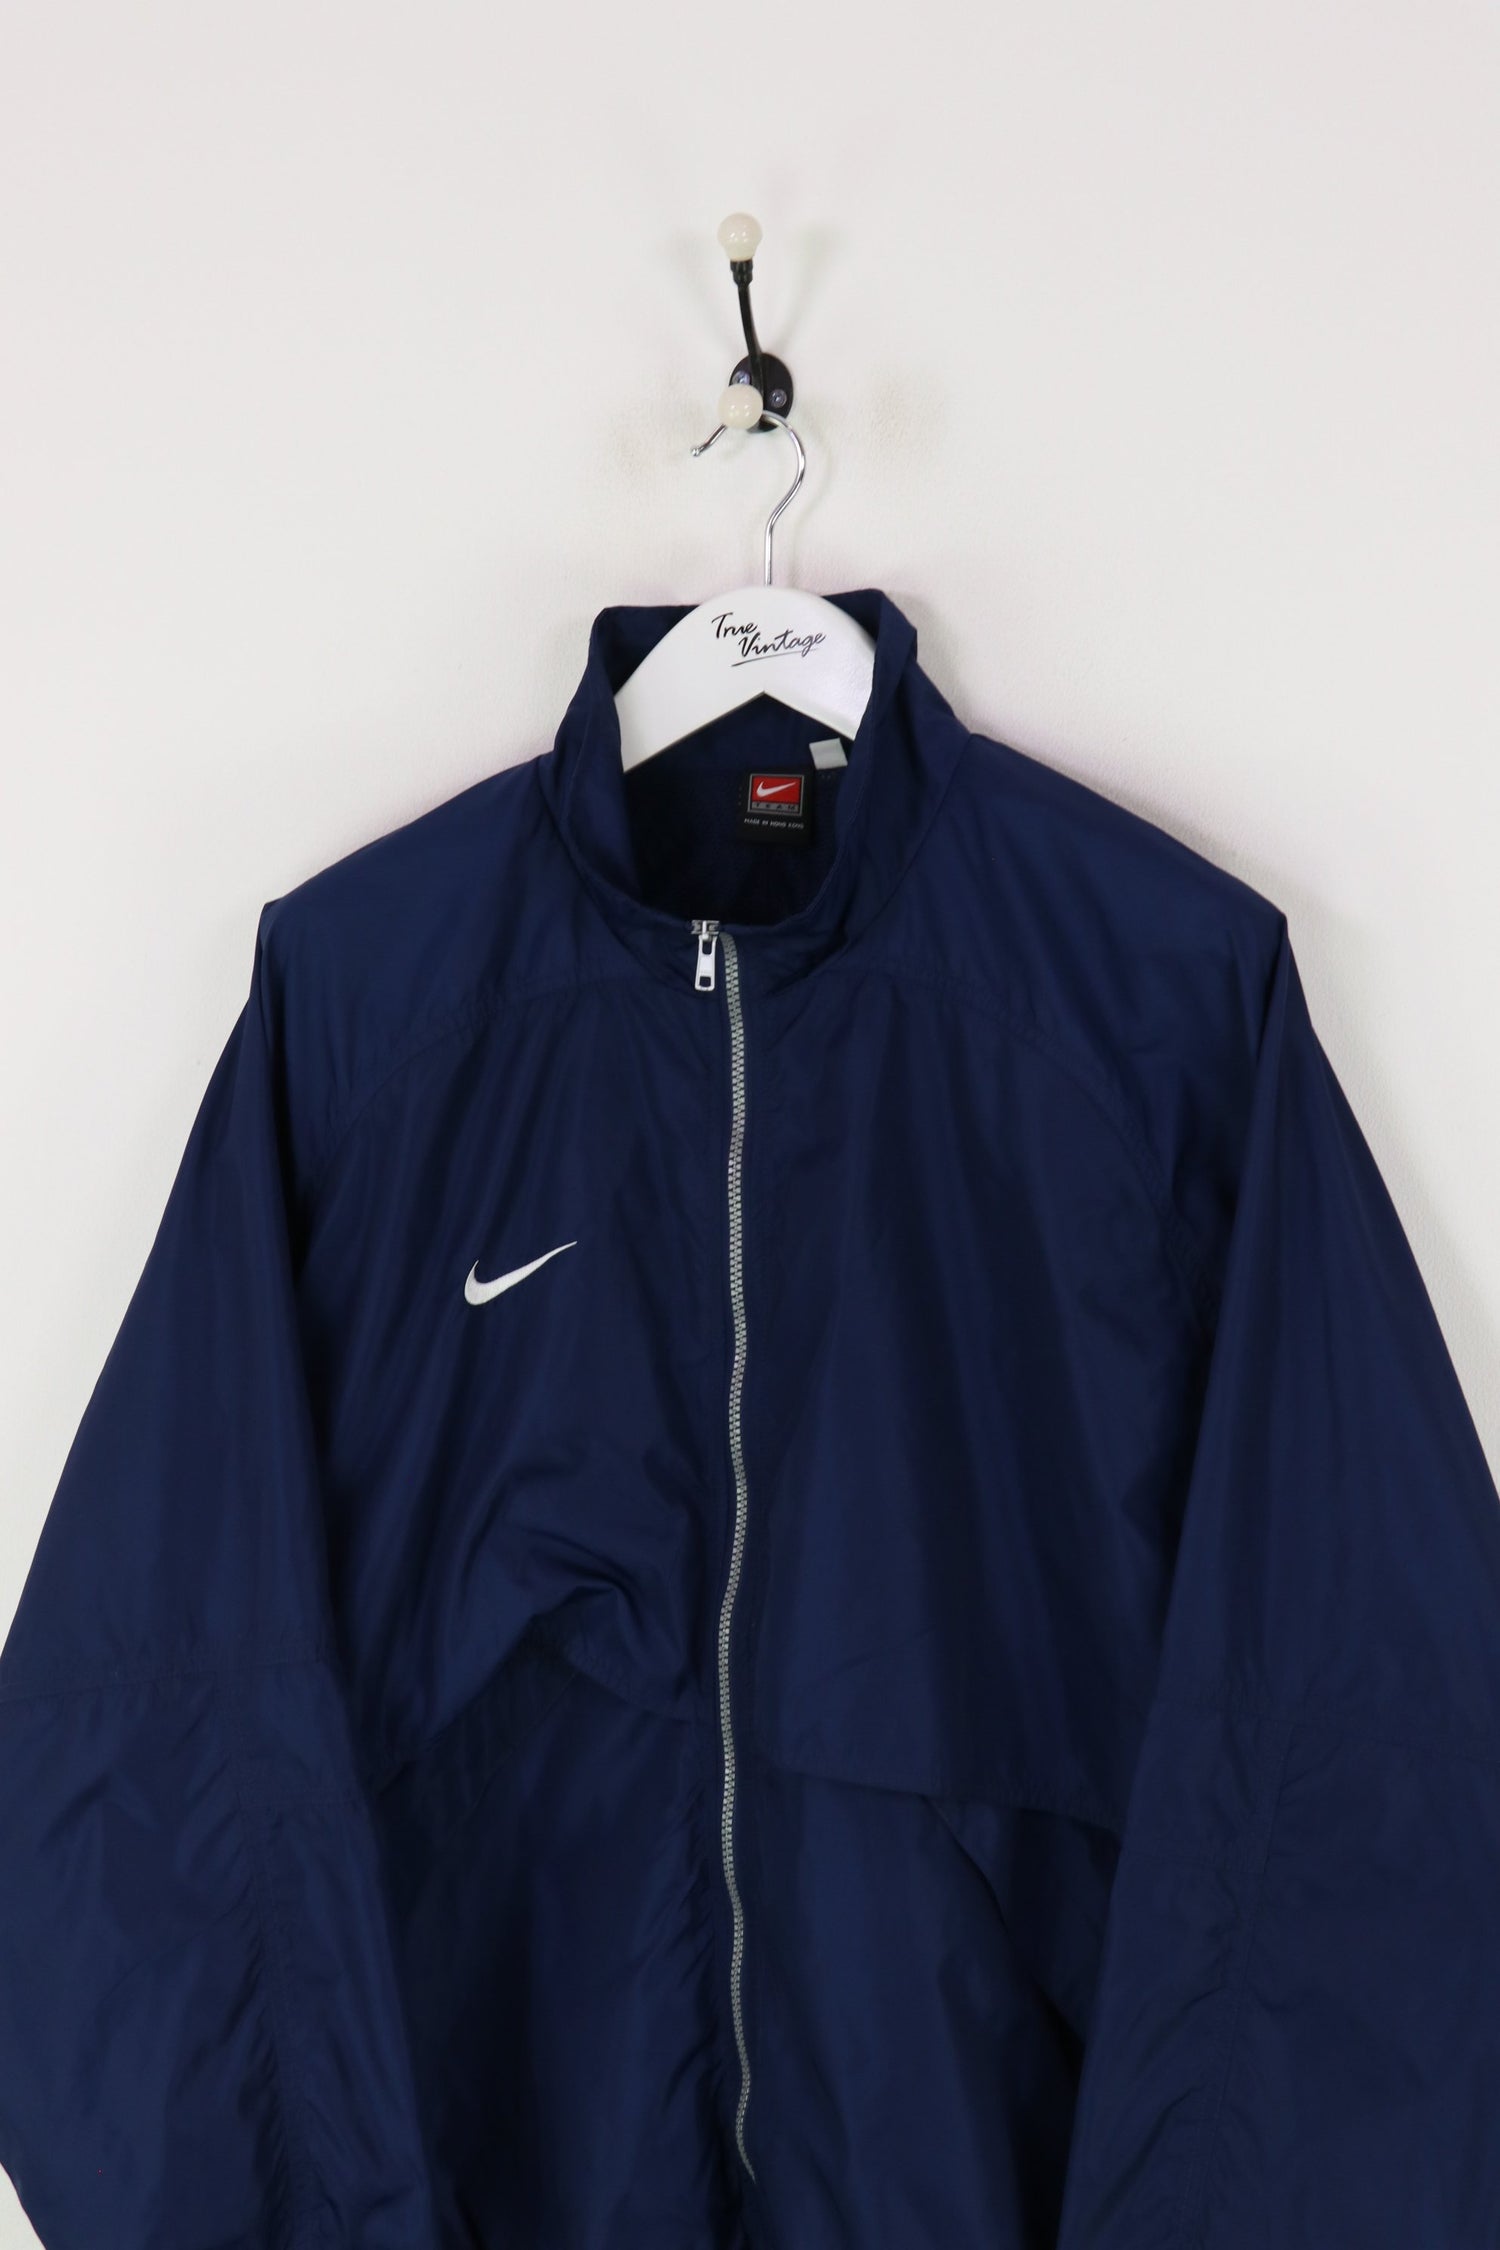 Nike Shell Suit Jacket Navy XL